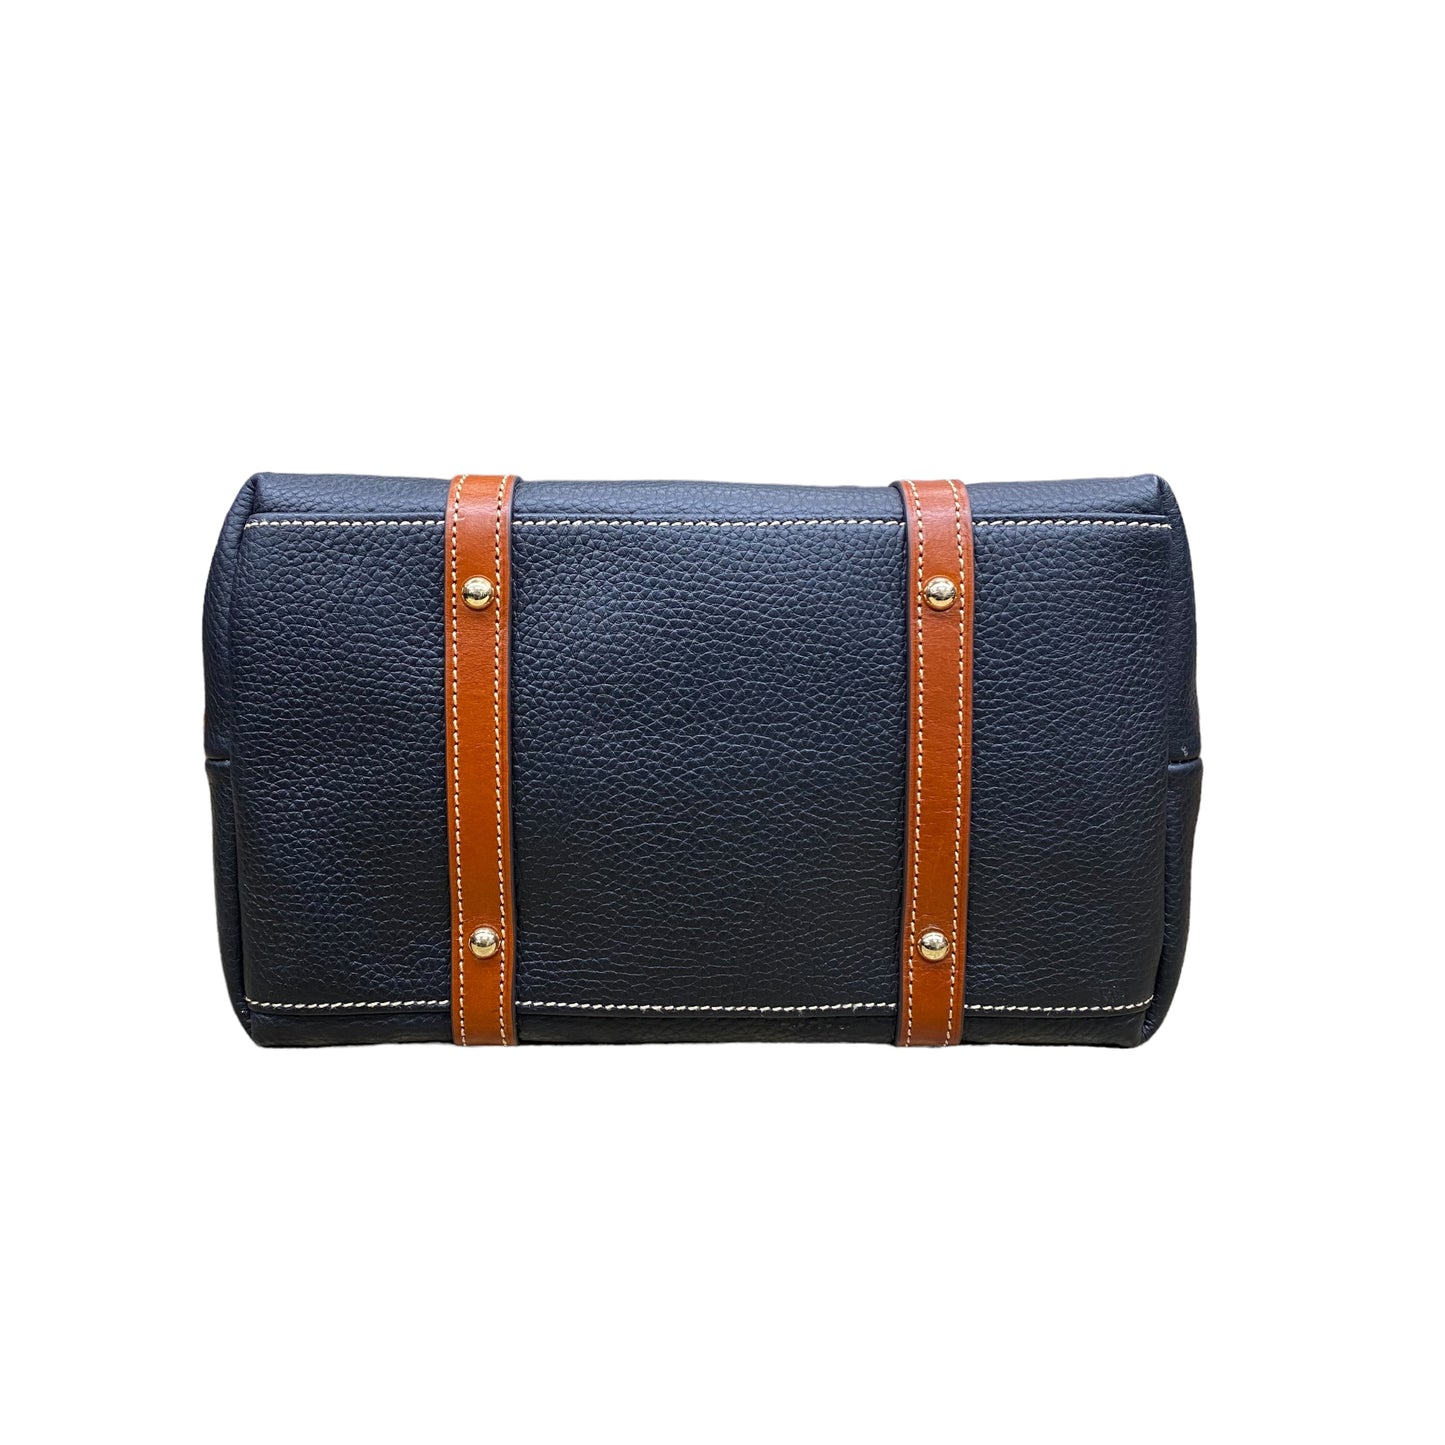 Handbag Designer By Dooney And Bourke  Size: Medium